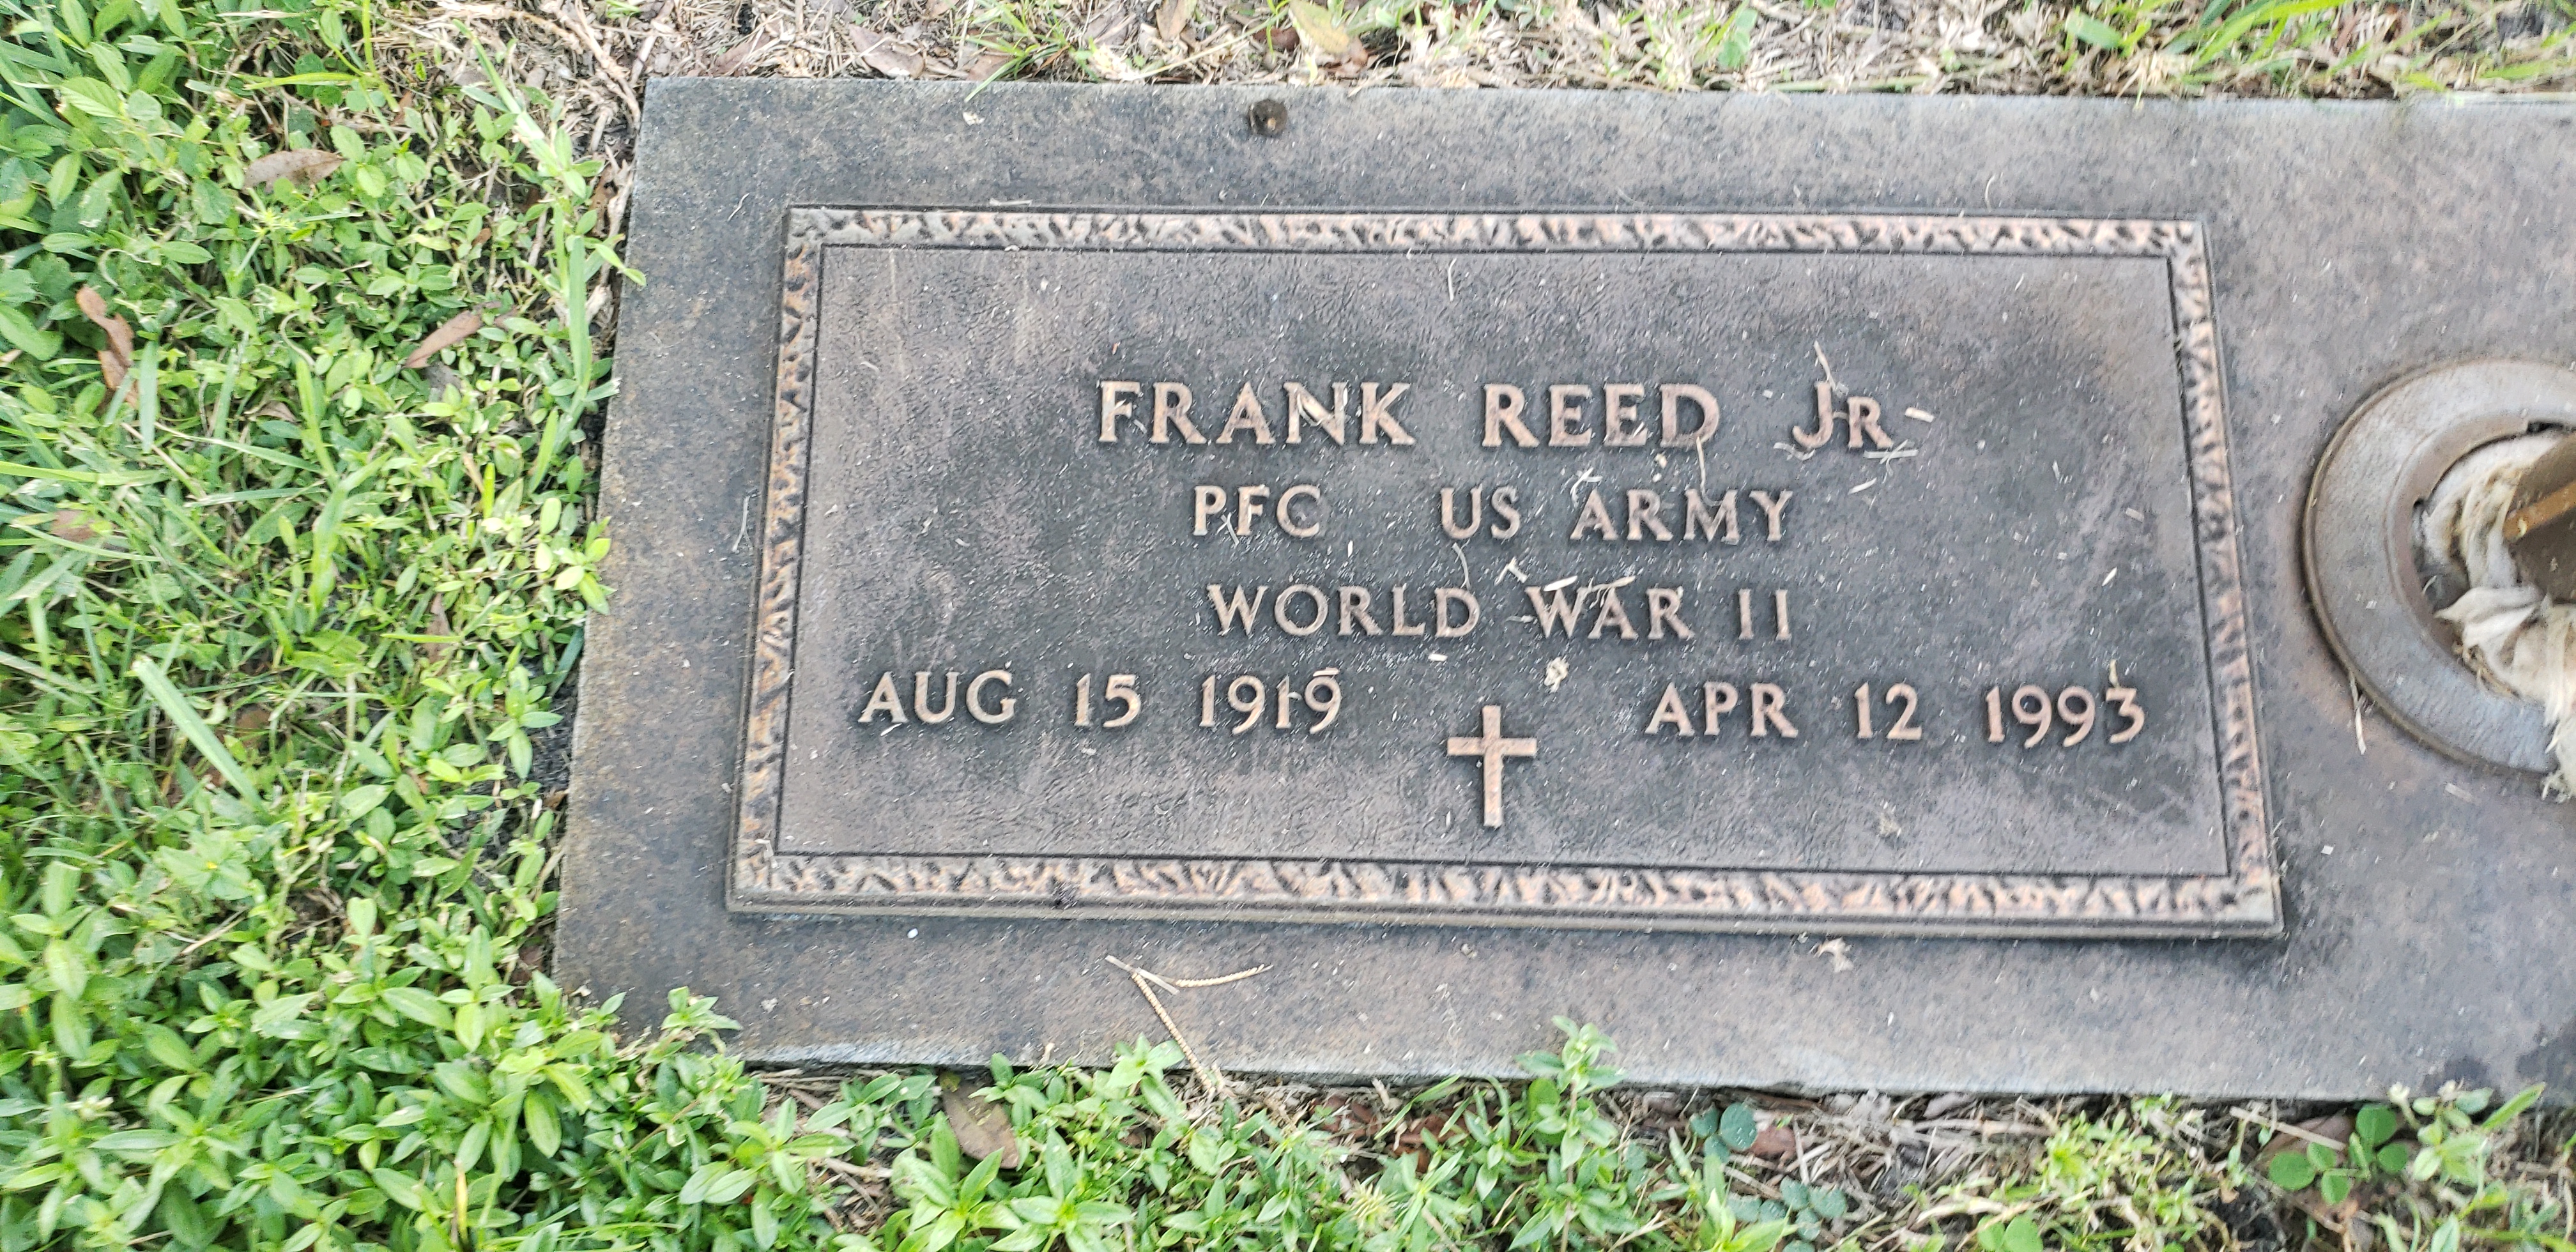 Frank Reed, Jr